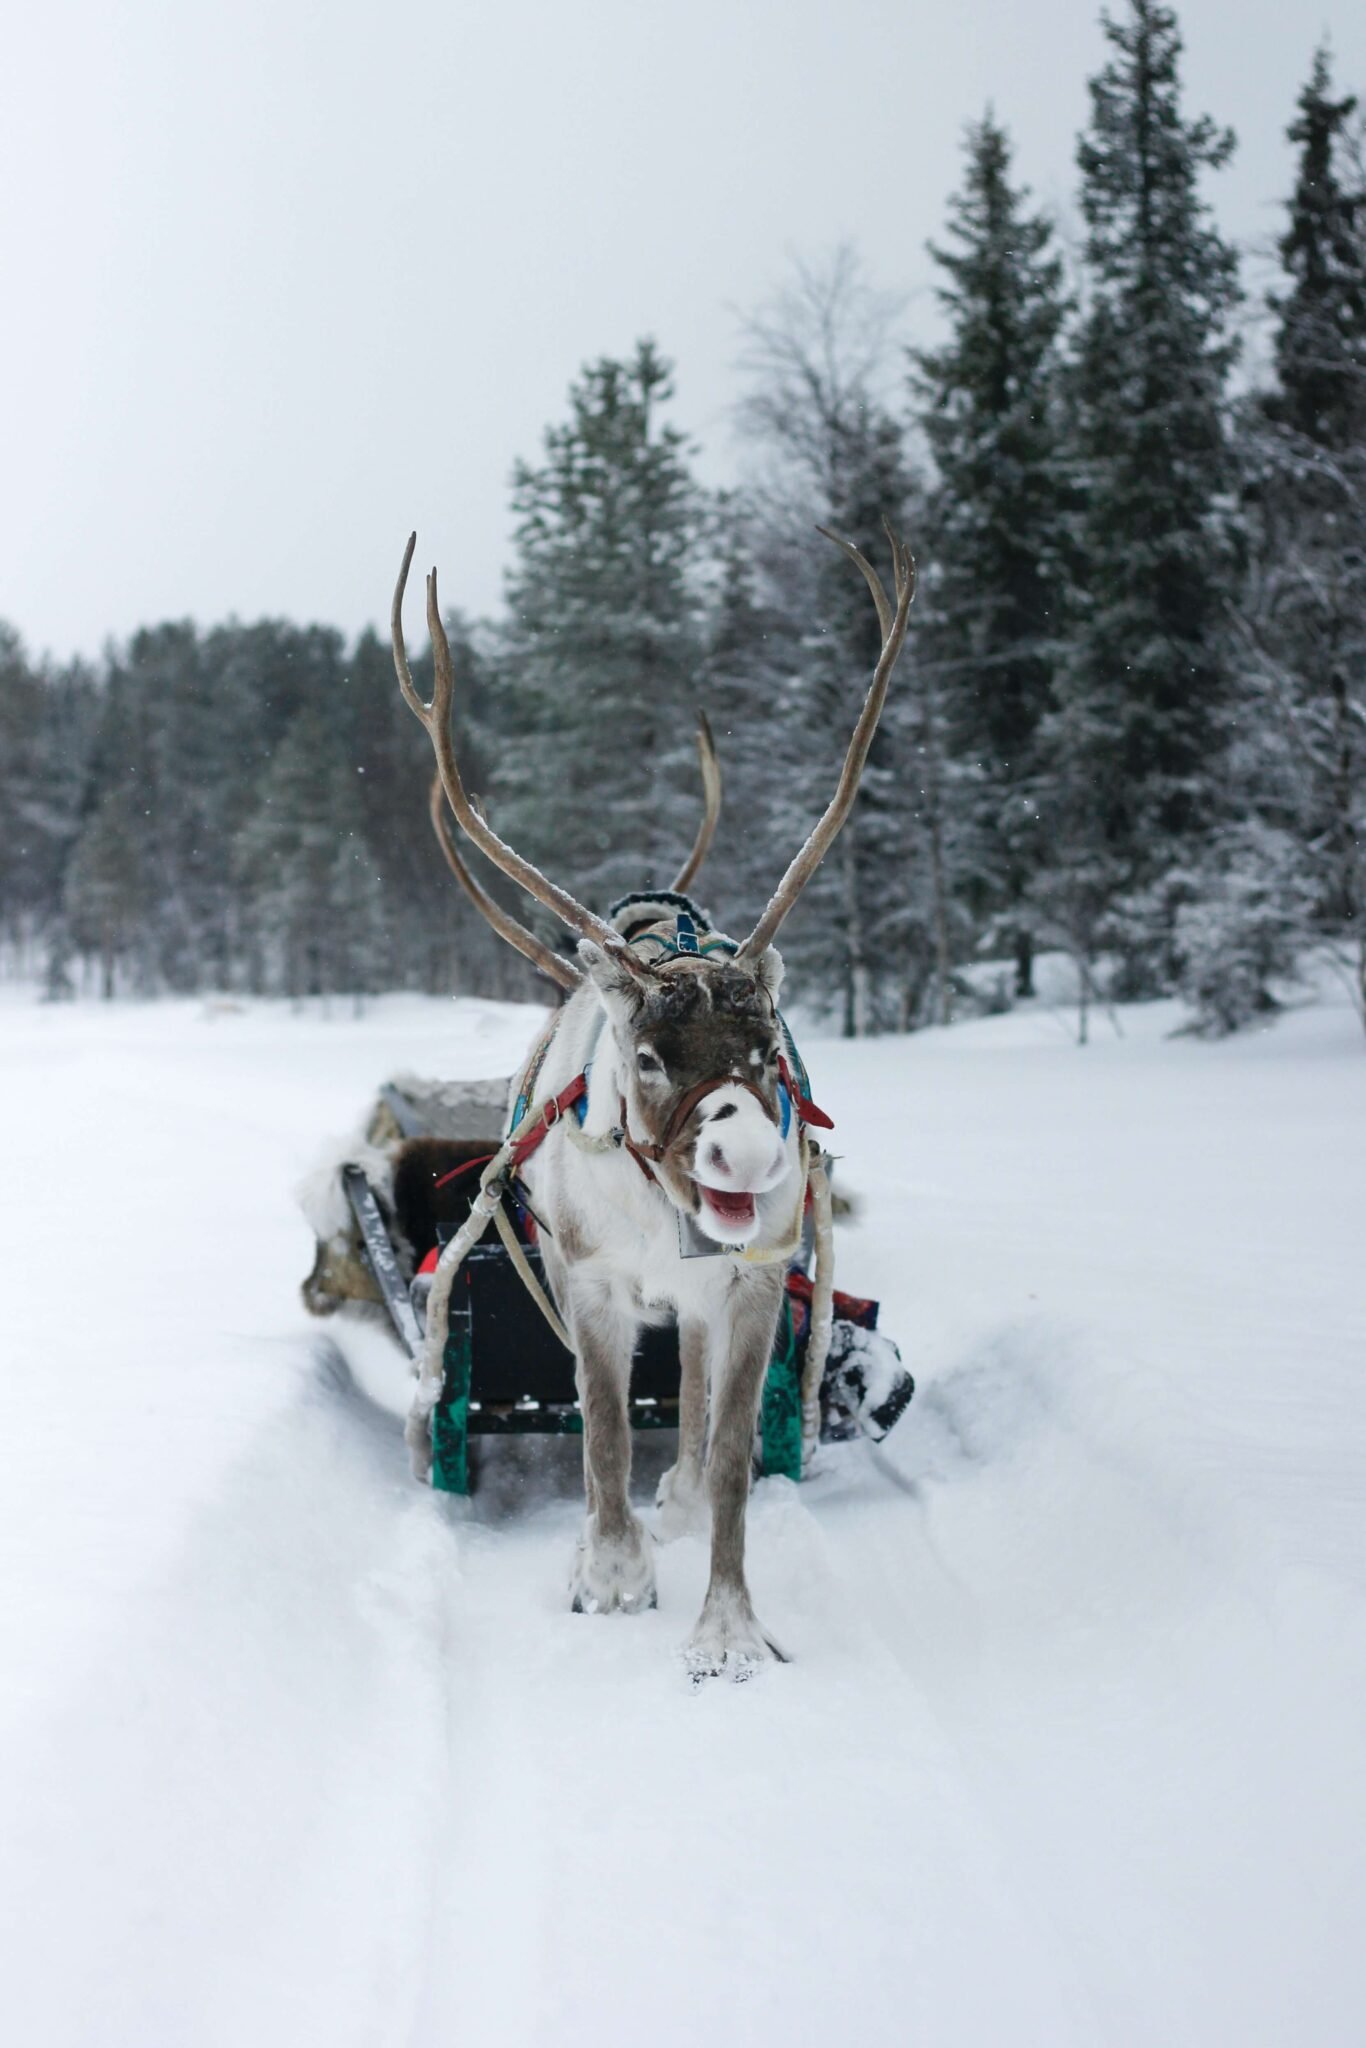 Finland, winter bucket list destinations